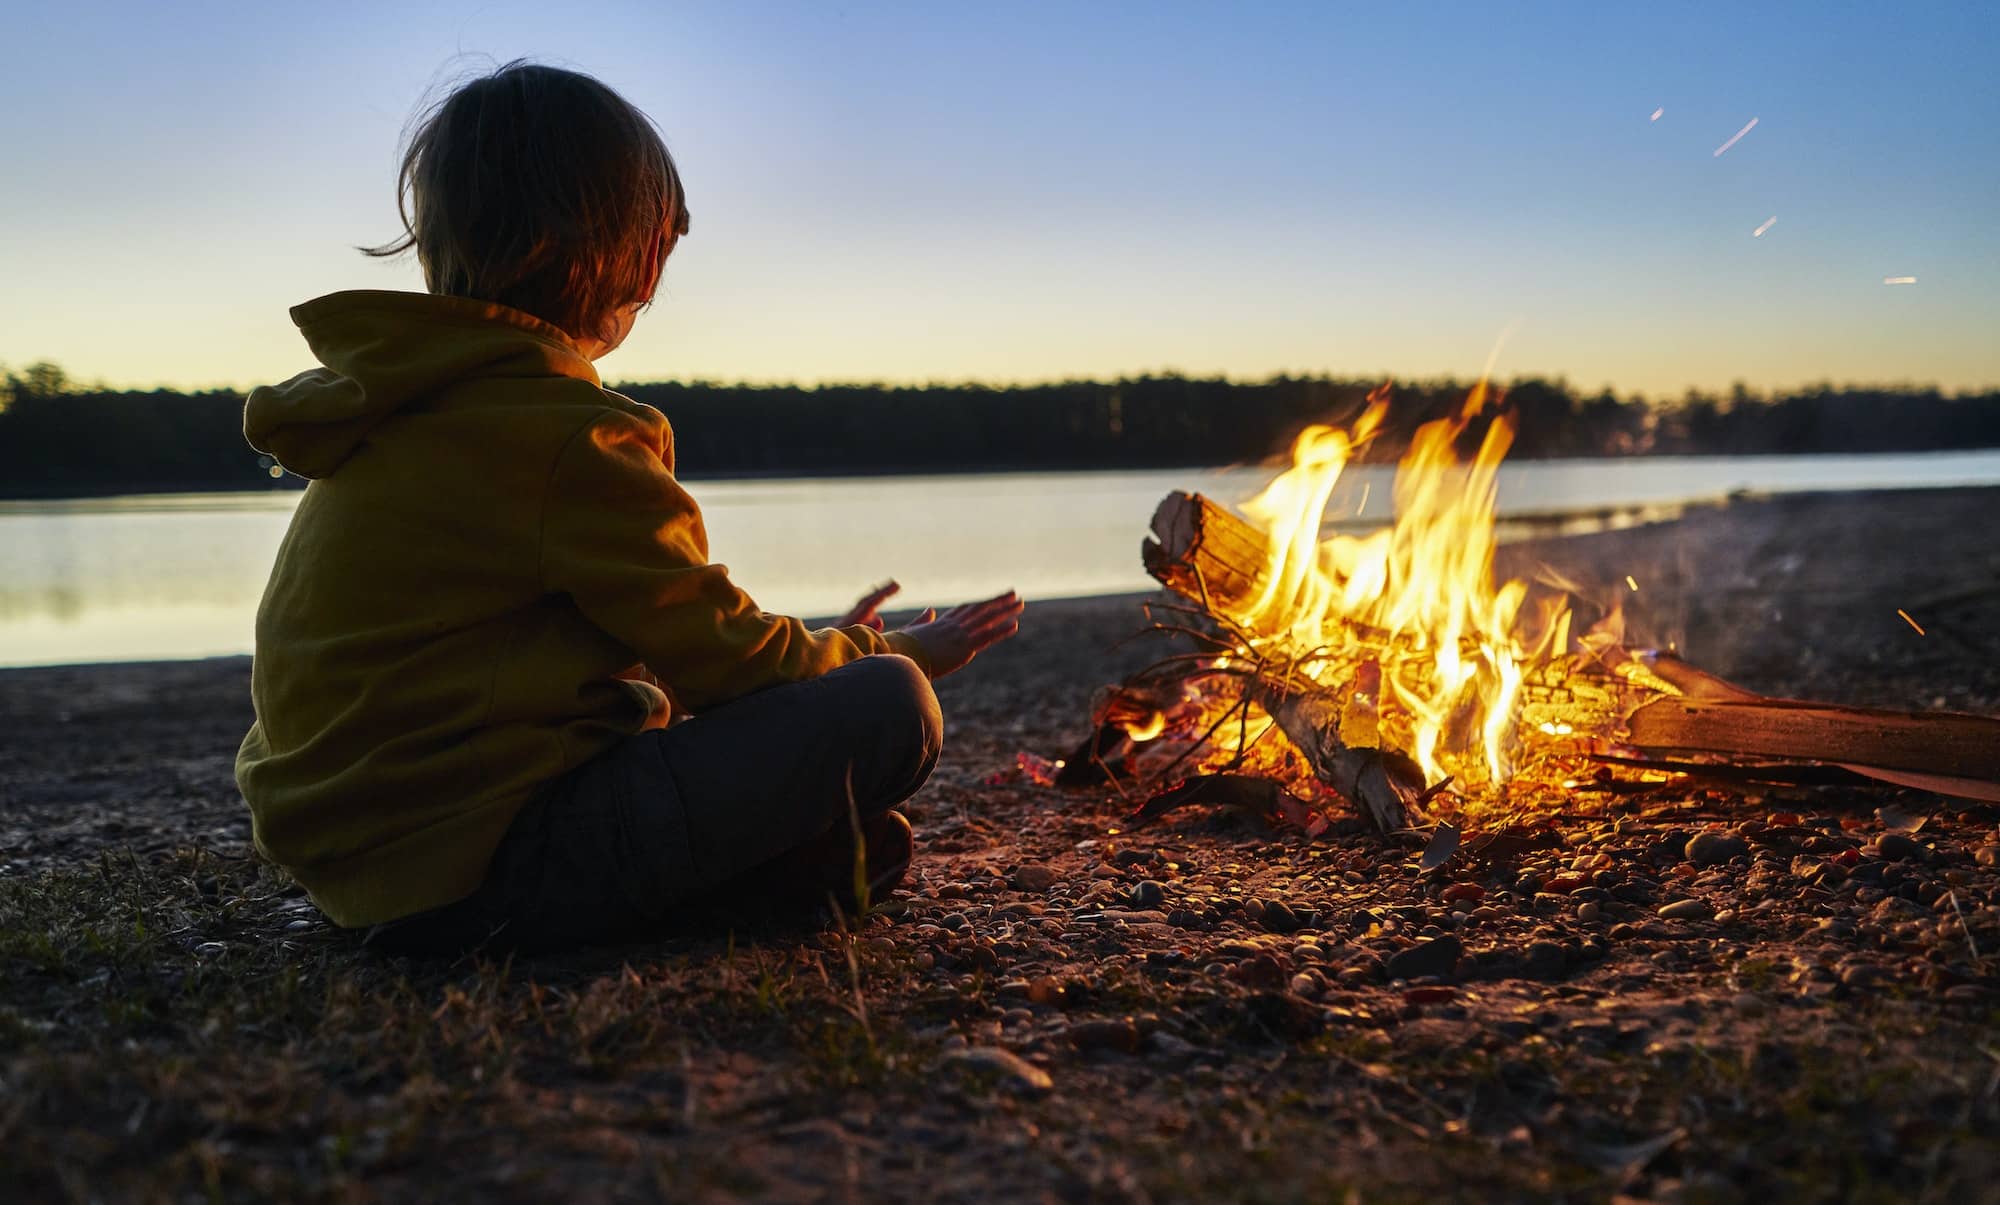 Argentina, Patagonia, Concordia, boy sitting at camp fire at a lake